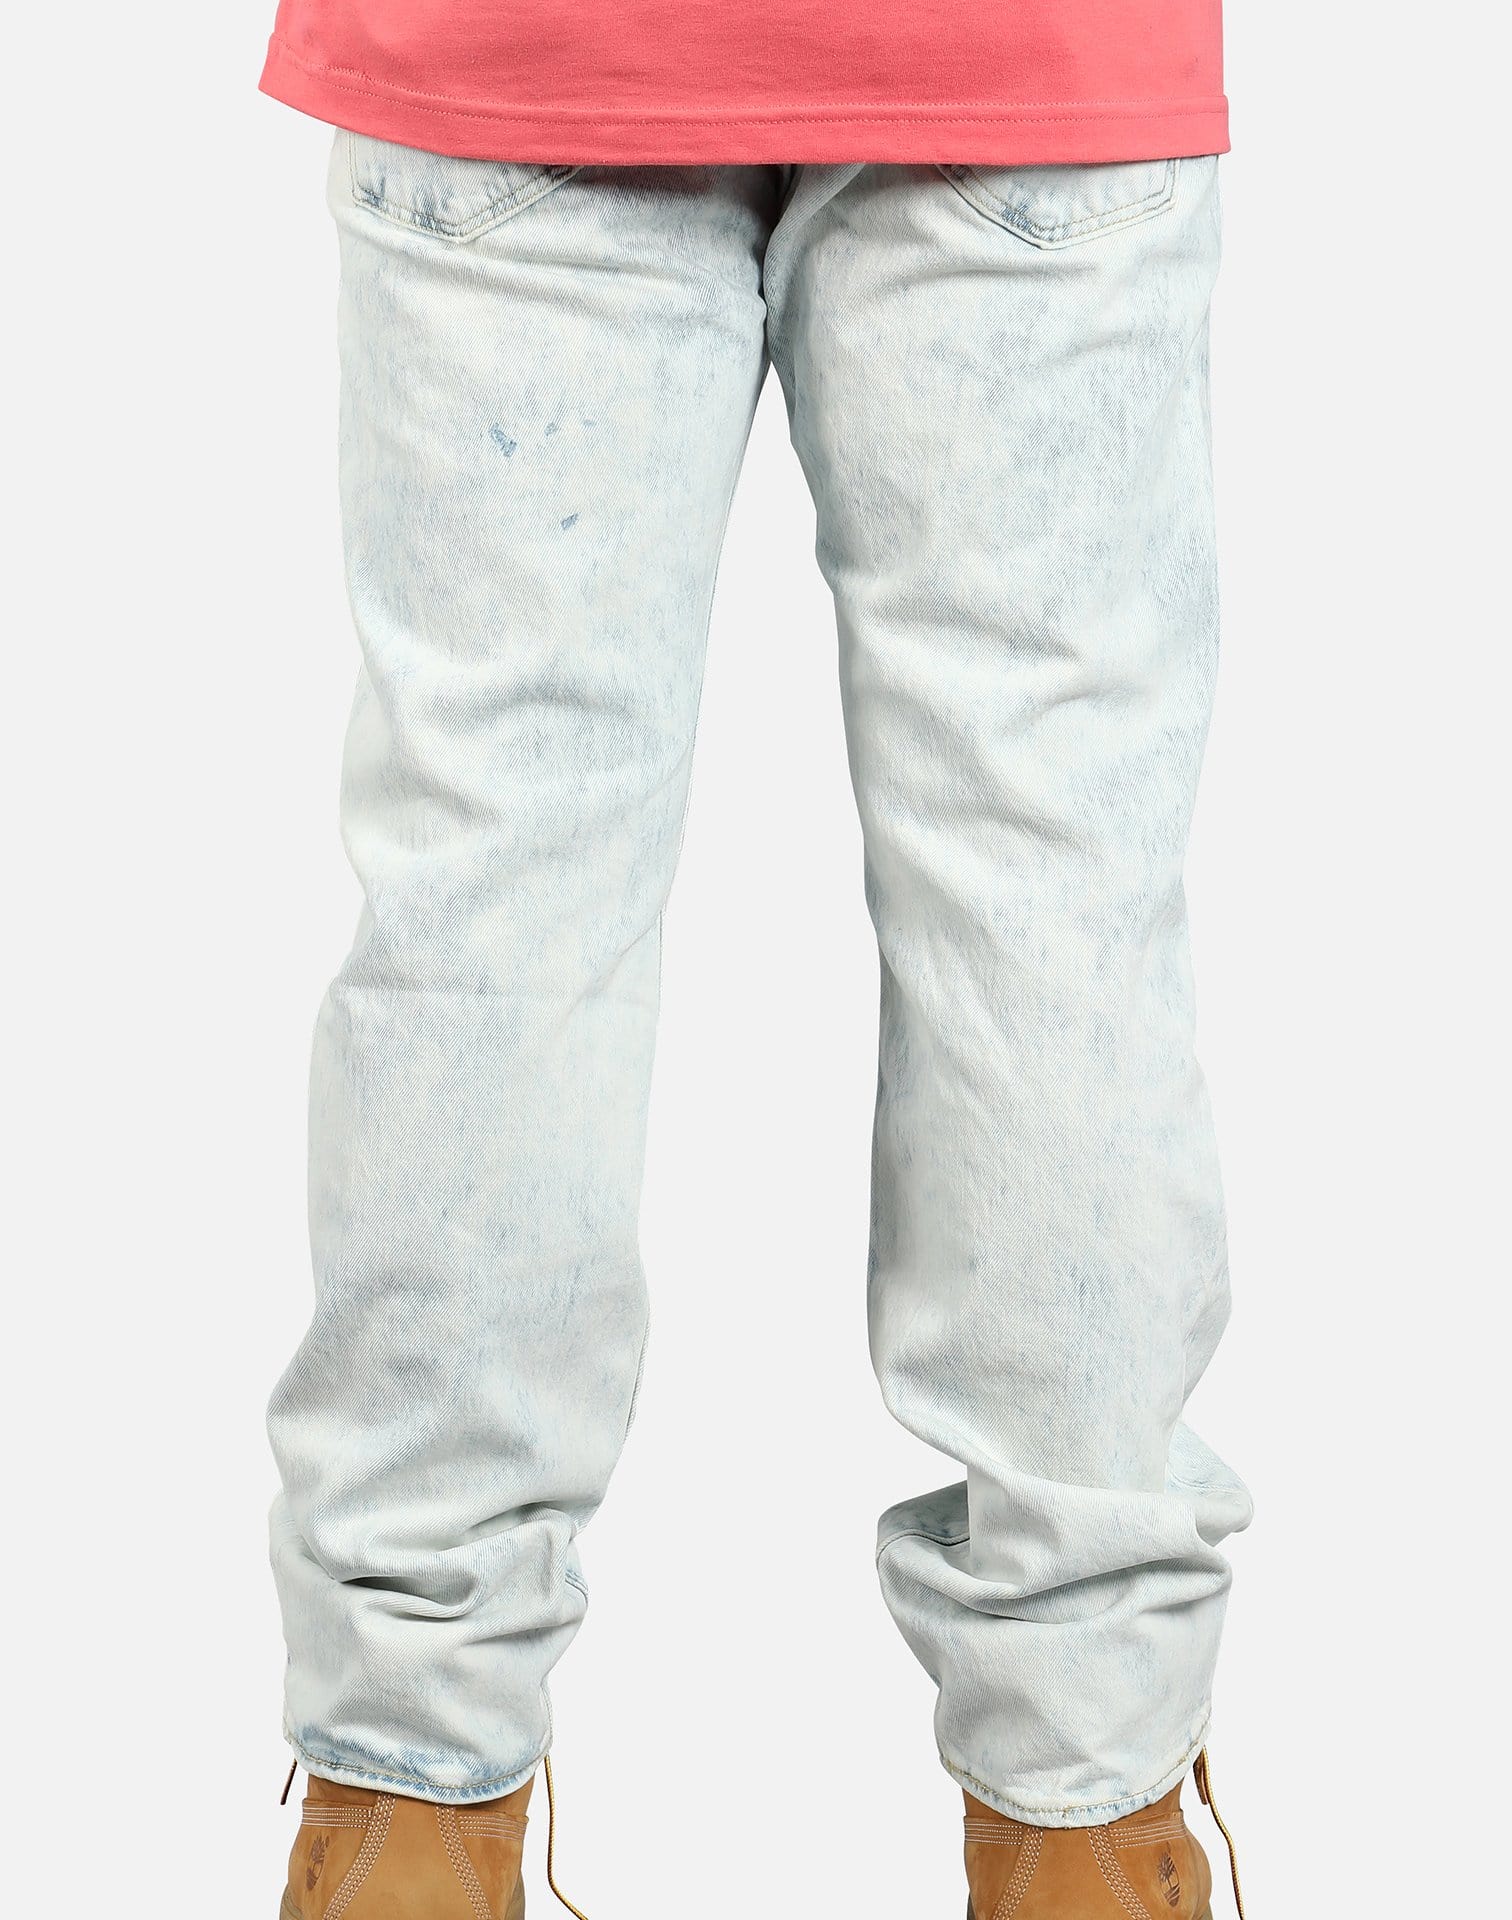 Levi's 501 Original Fit Stretch Jeans